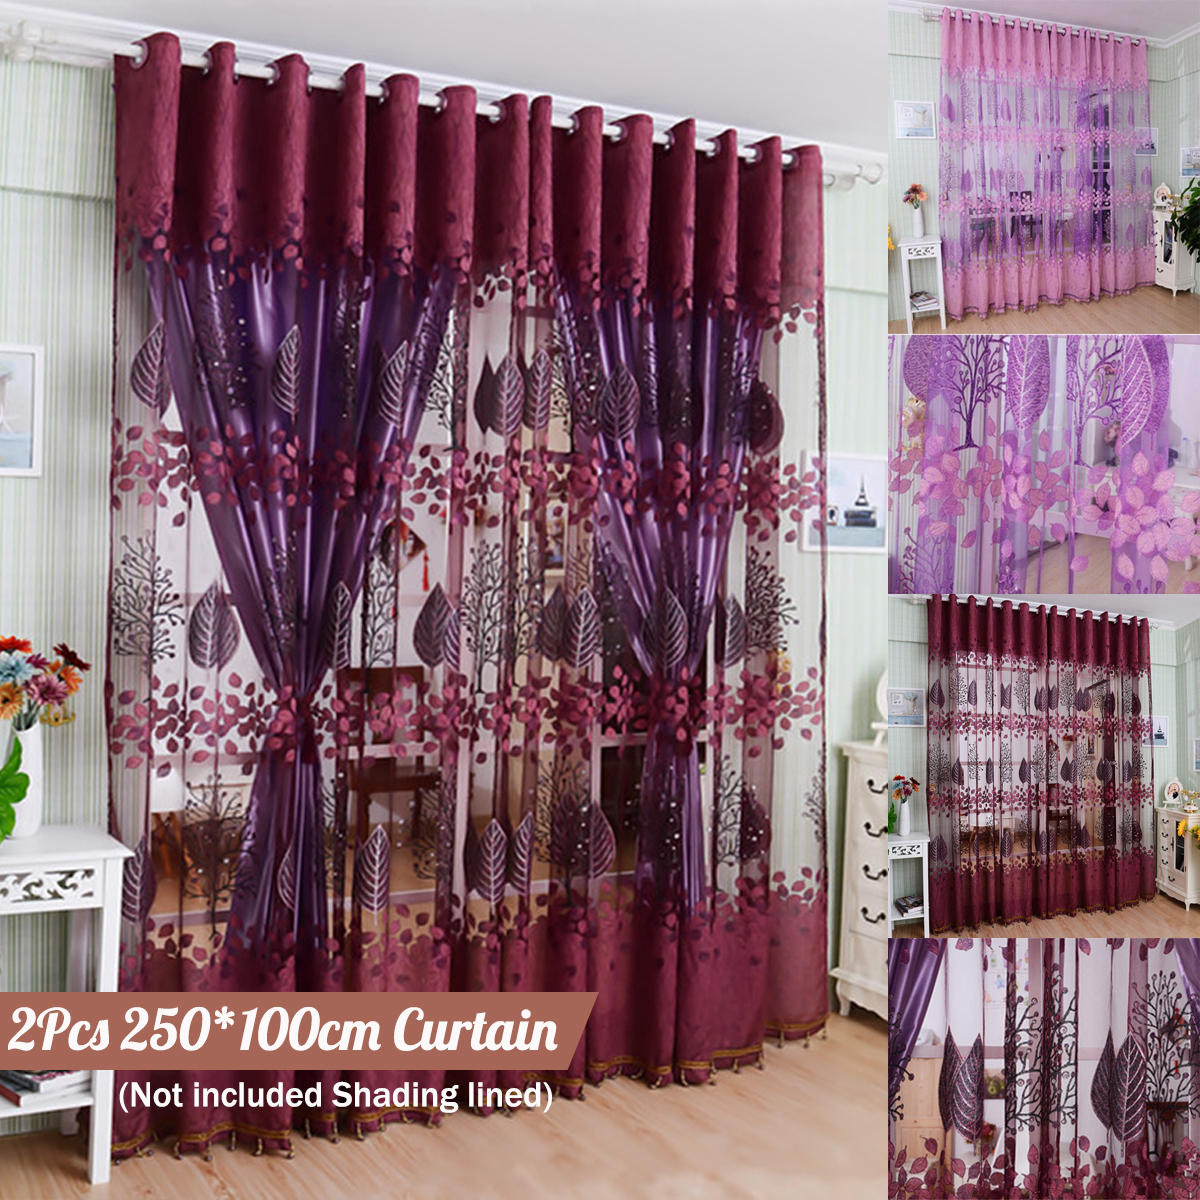 

DYQ 250*100cm Living Room Curtain Floral Tulle Door Window Curtain Drape Panel Sheer Scarf Valances Glass Yarn Curtains